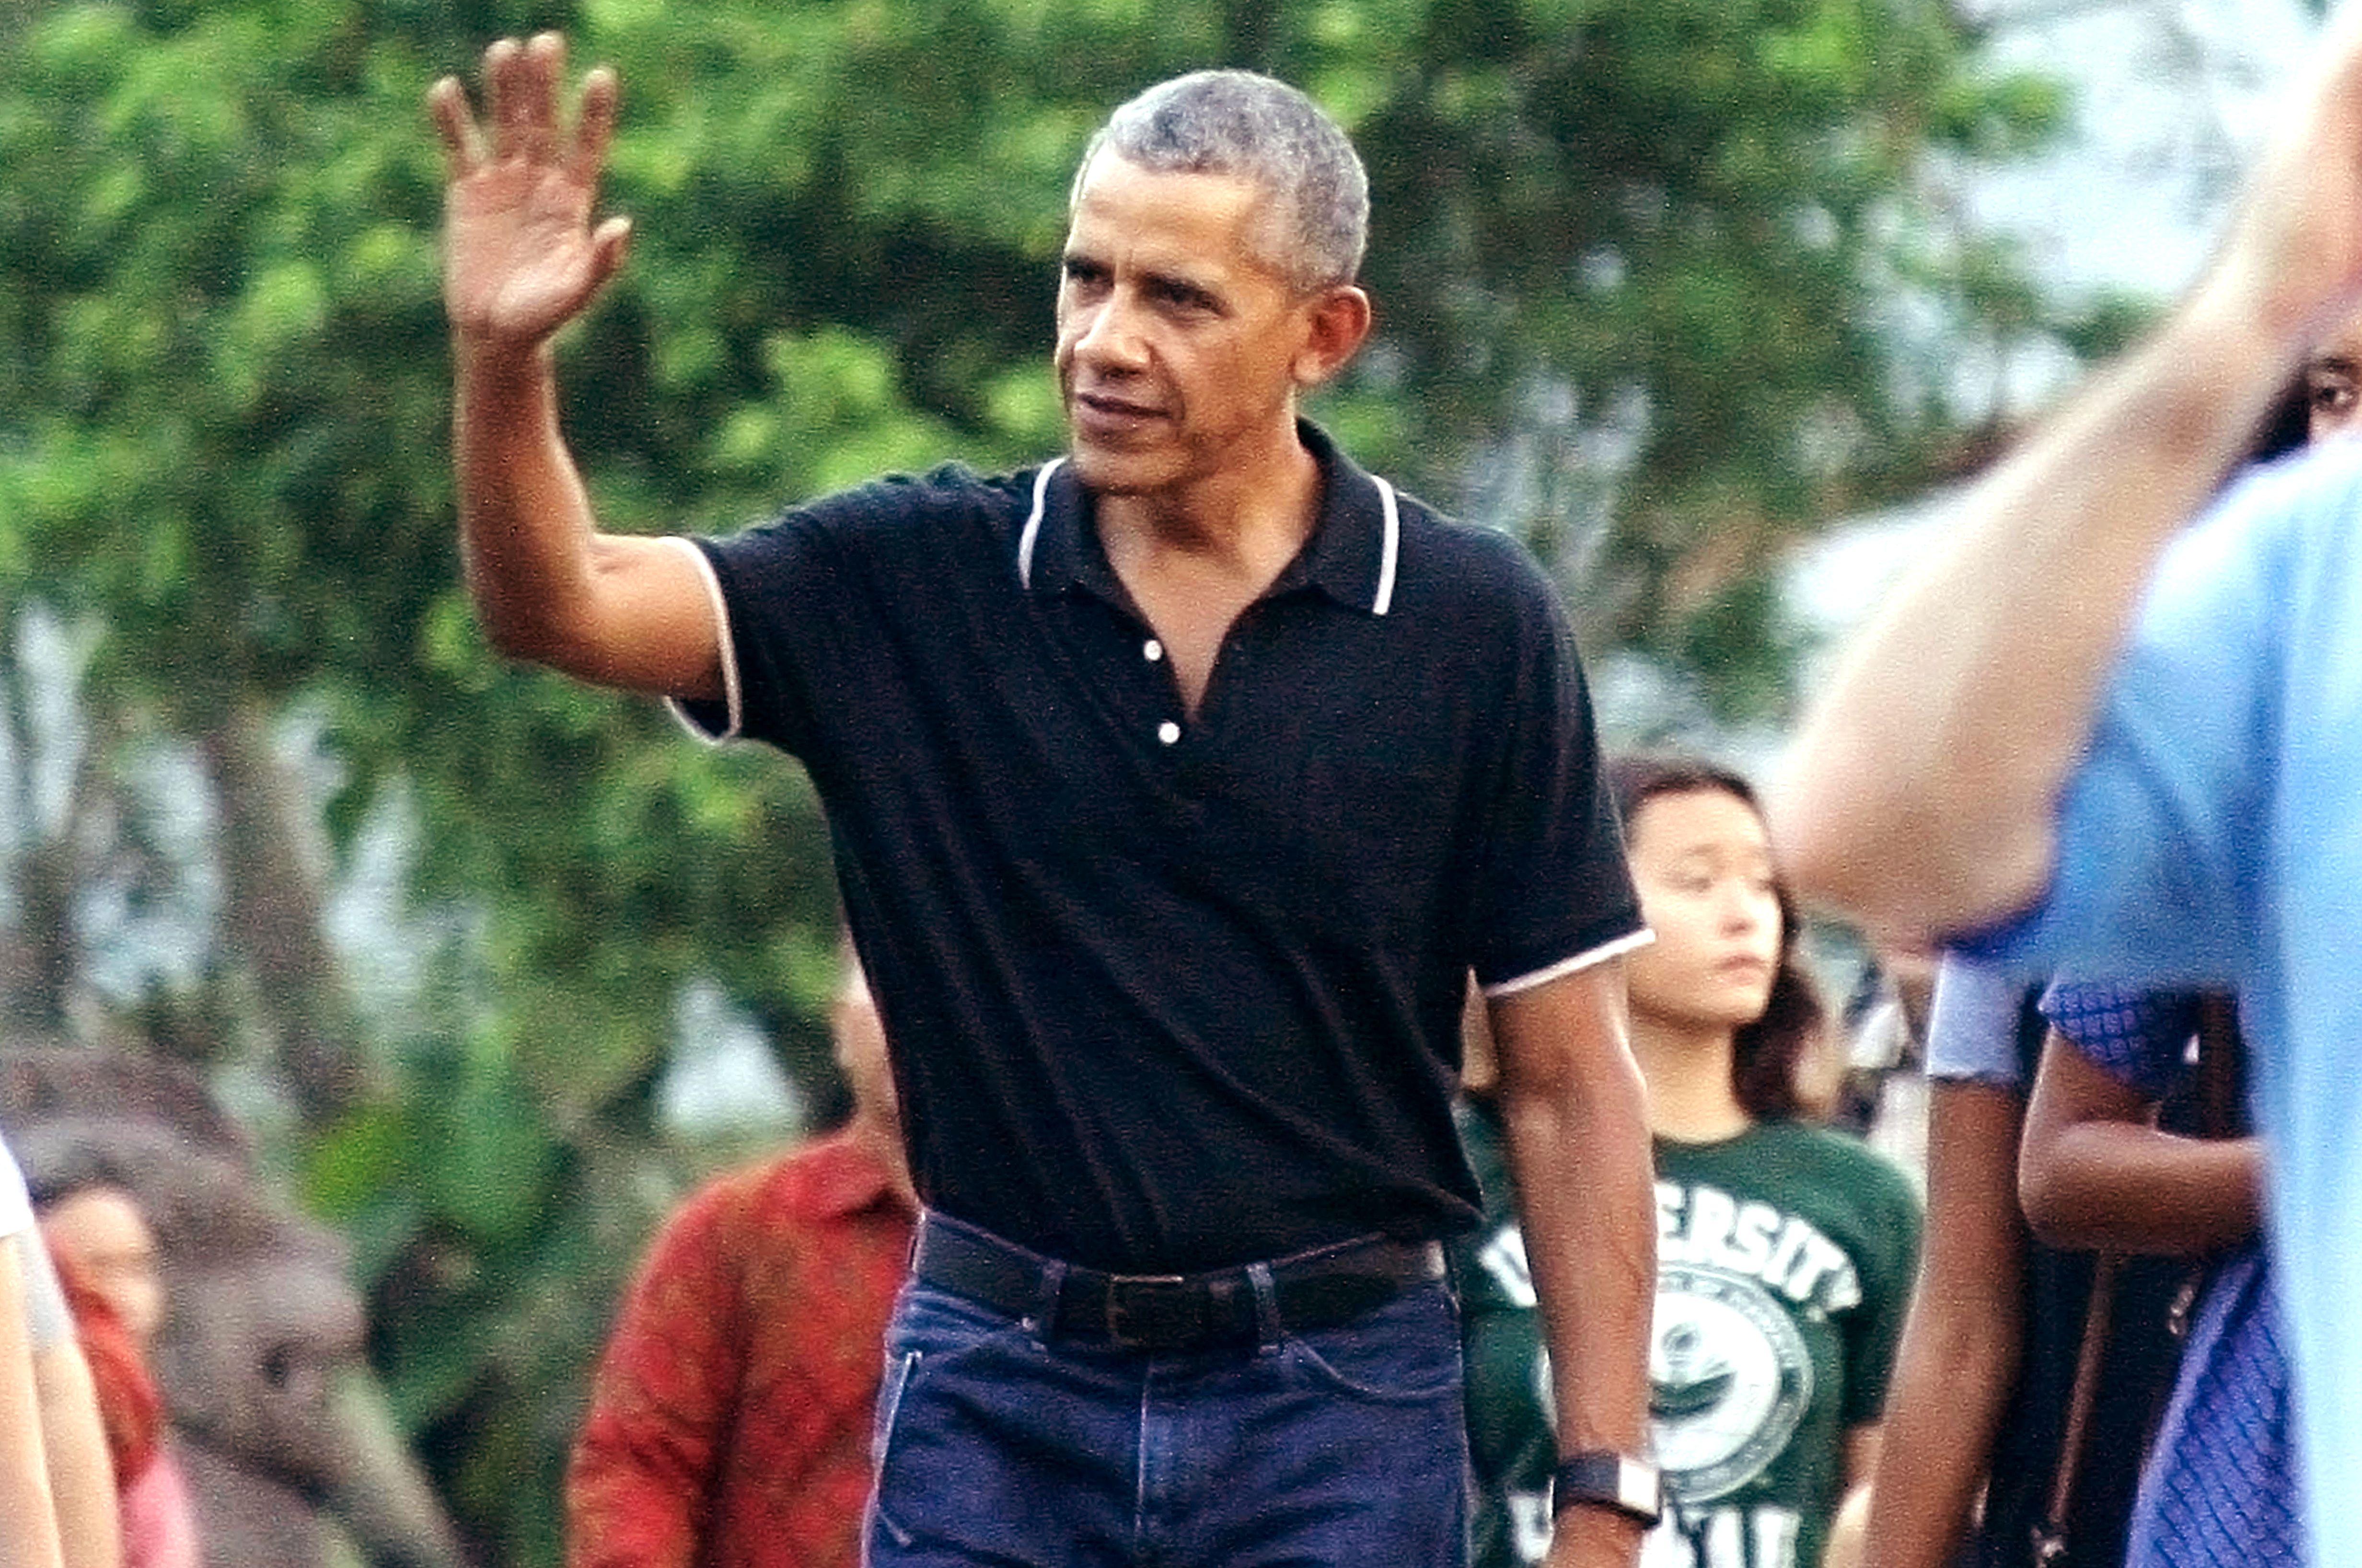 Barack Obama's Ultimate Fashion - Obama Was Peak Dad